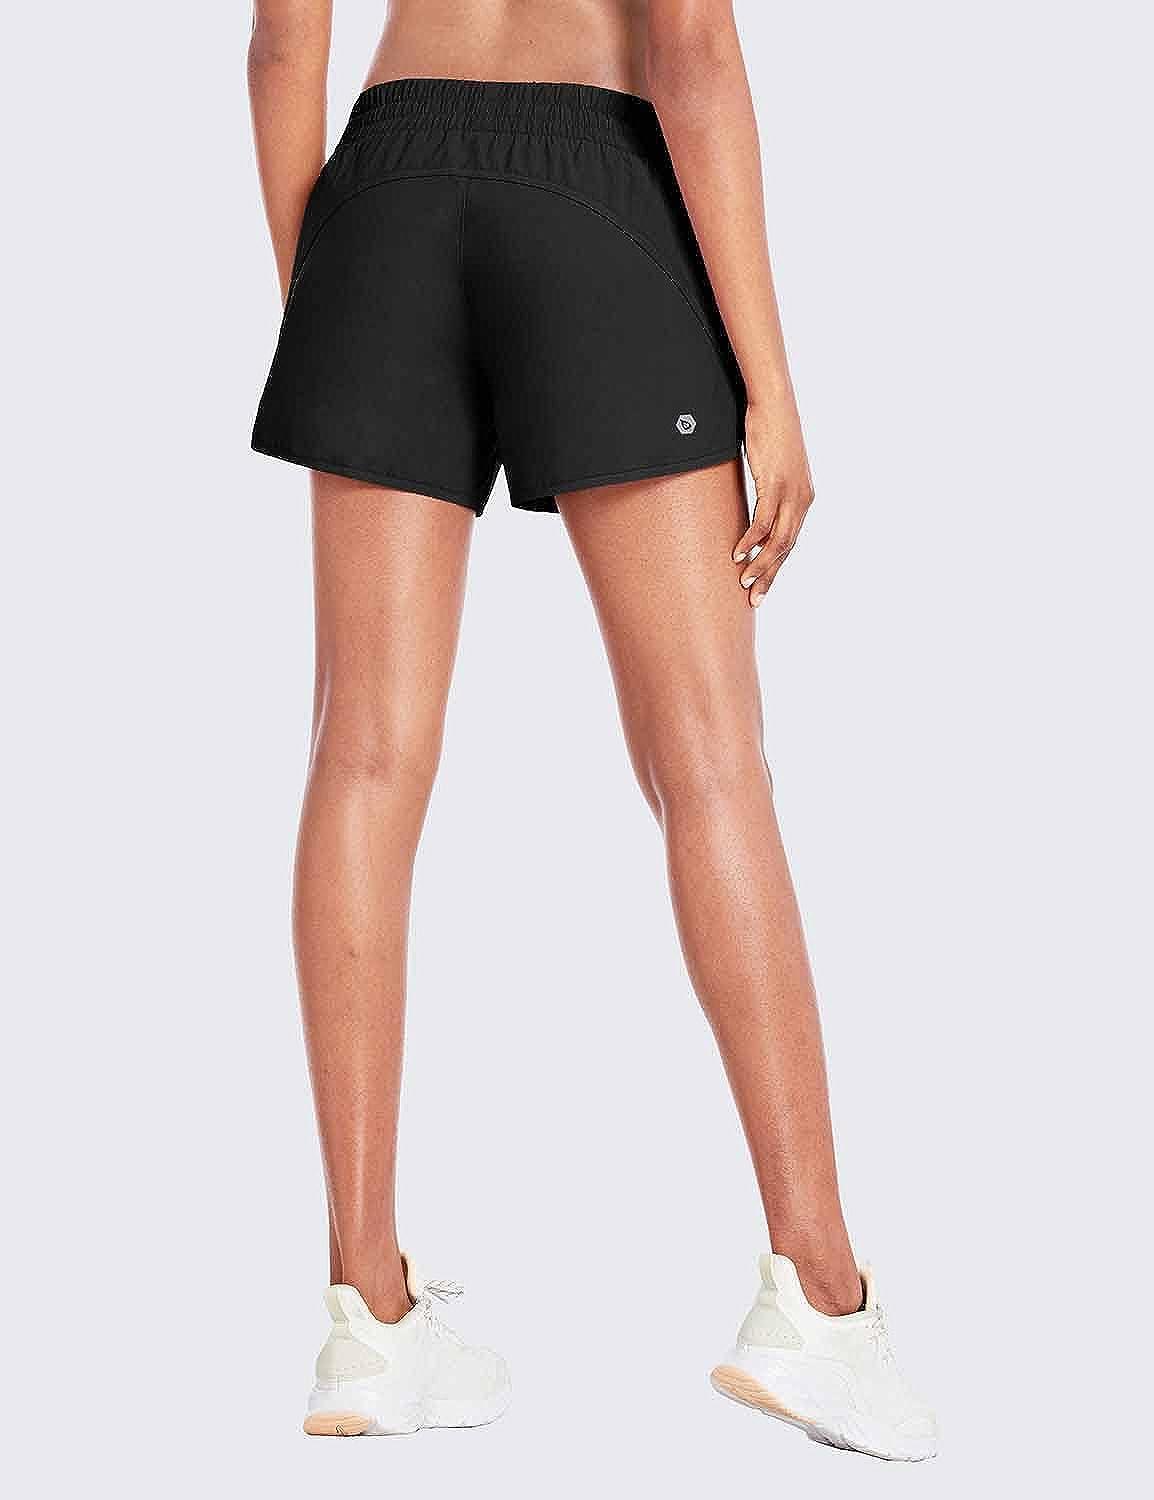 BALEAF Women's 4 Running Shorts Zipper Pockets Quick Dry Athletic